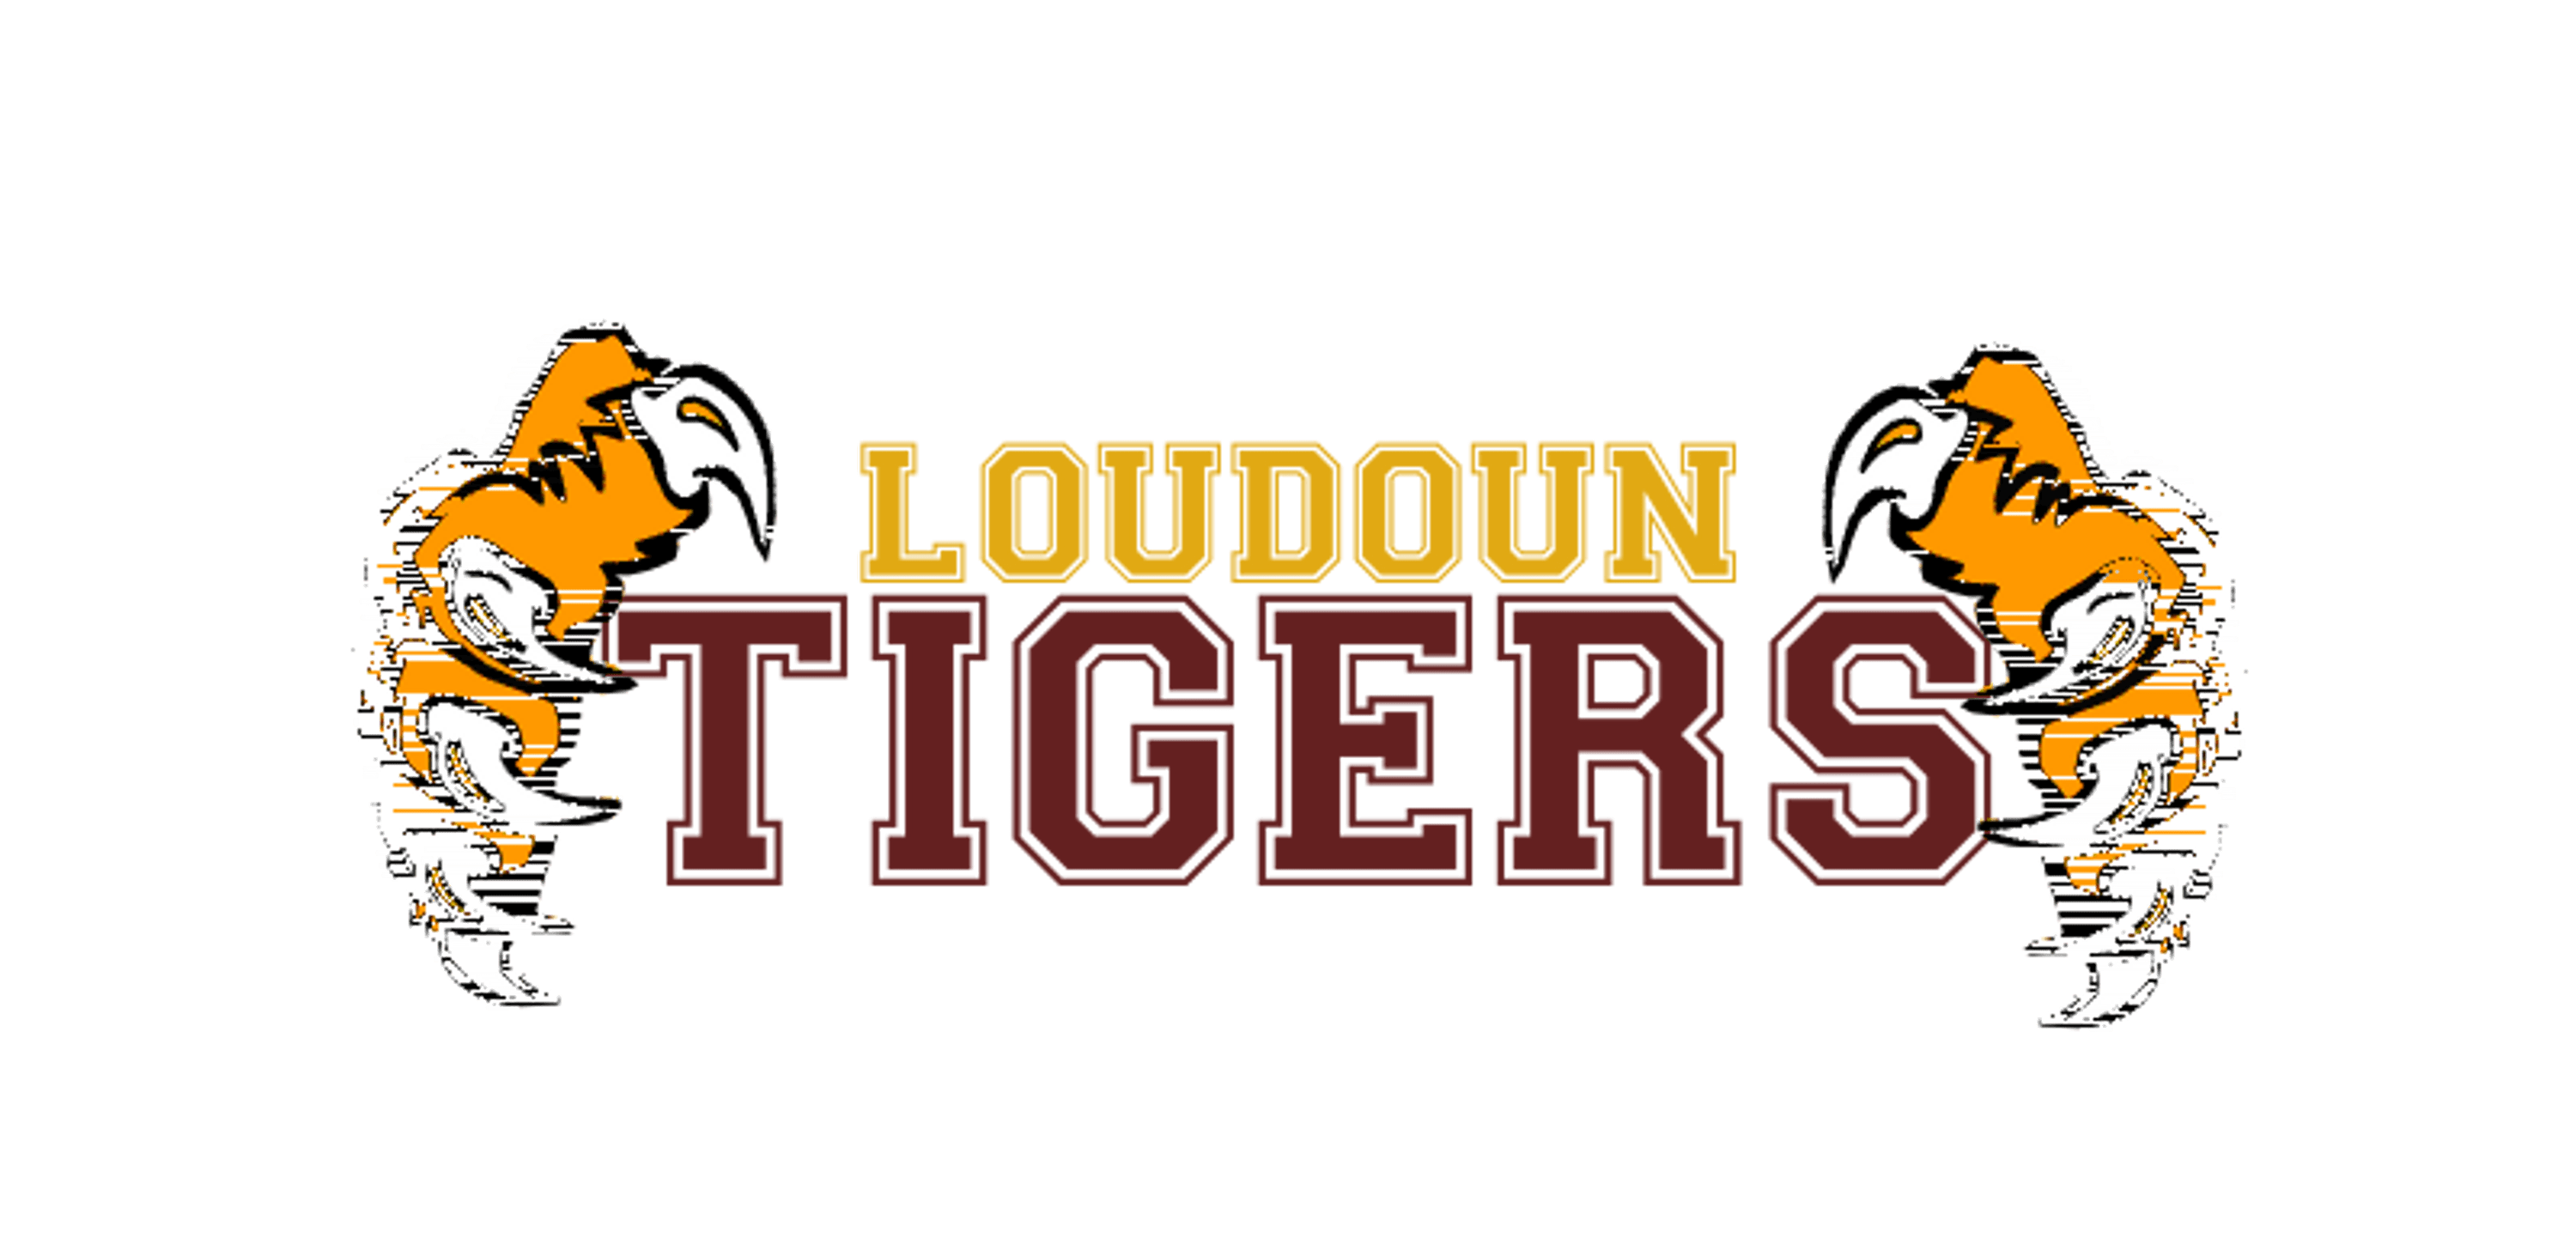 LC Tigers Logo - Schedule | Loudoun Tigers